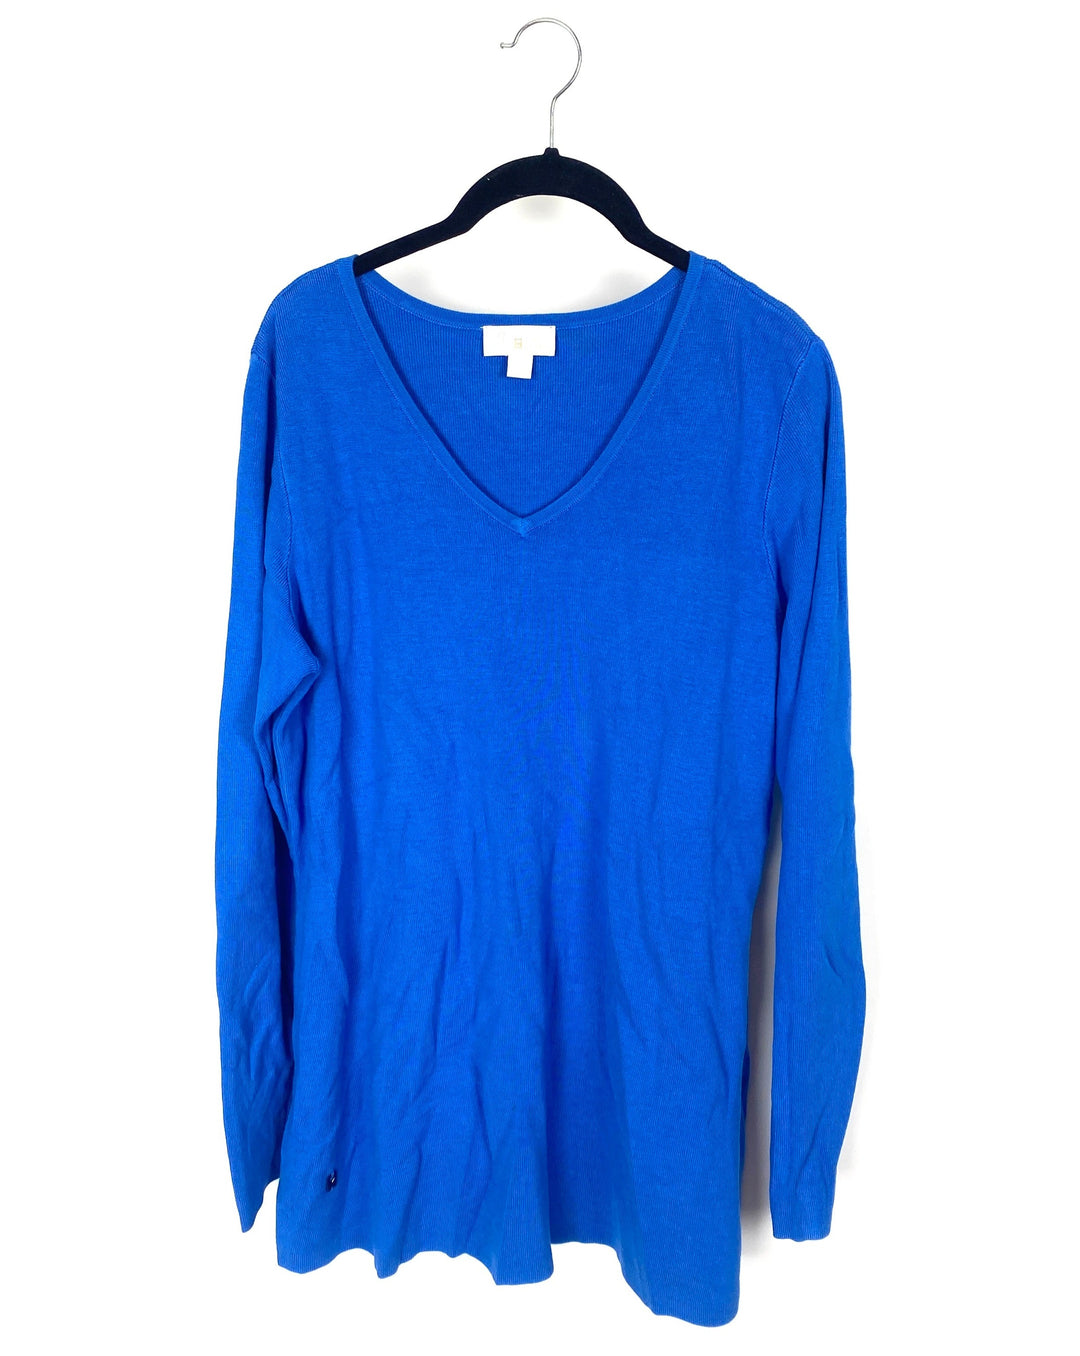 Blue Sweater - Medium/Large